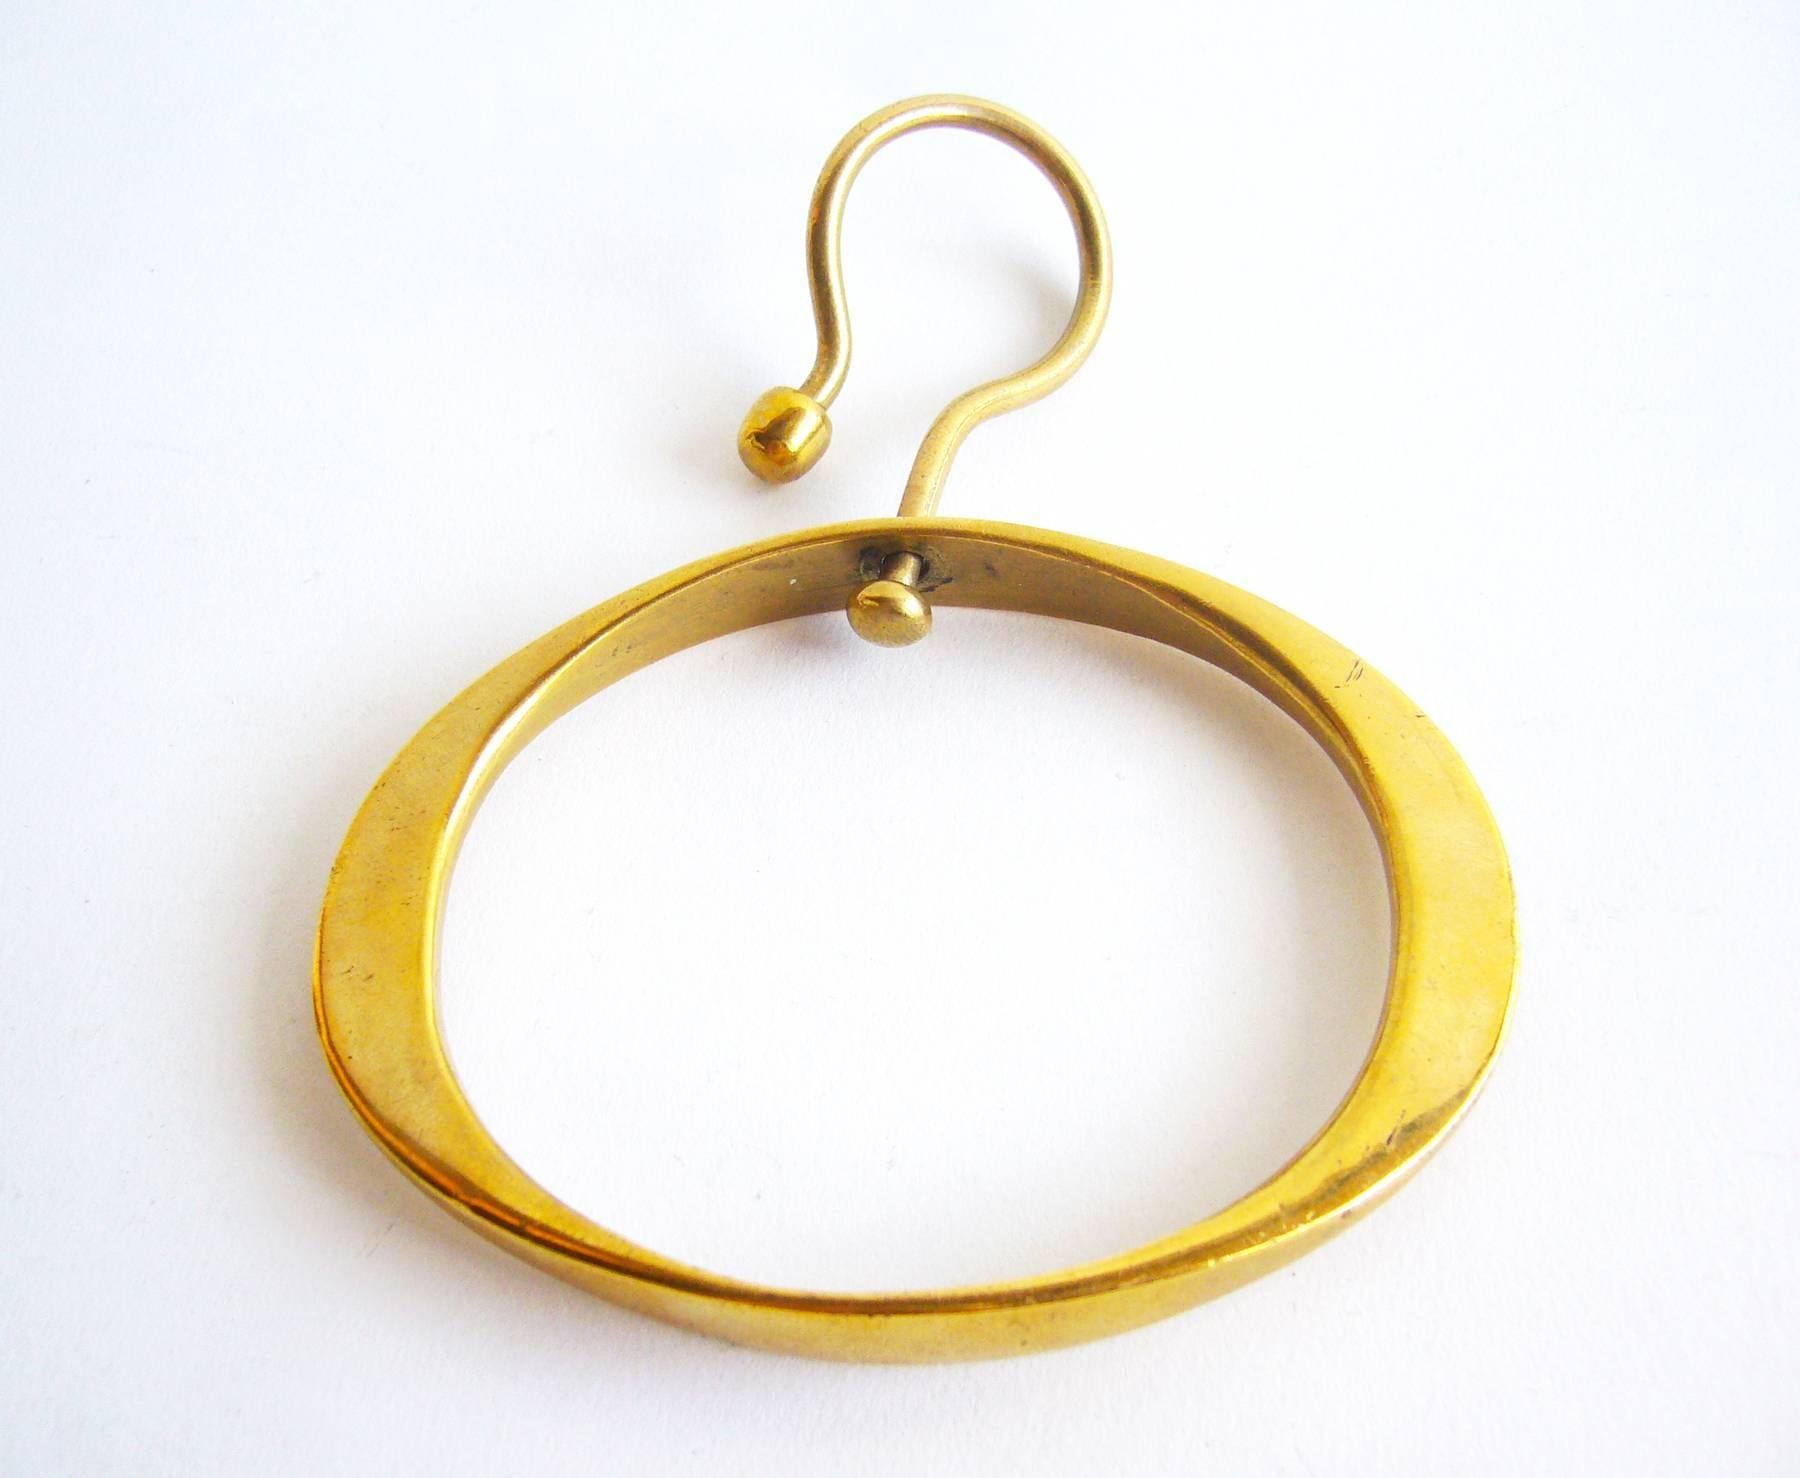 A key chain bracelet created by Jack Boyd of San Diego, California.  Bracelet measures 3.5